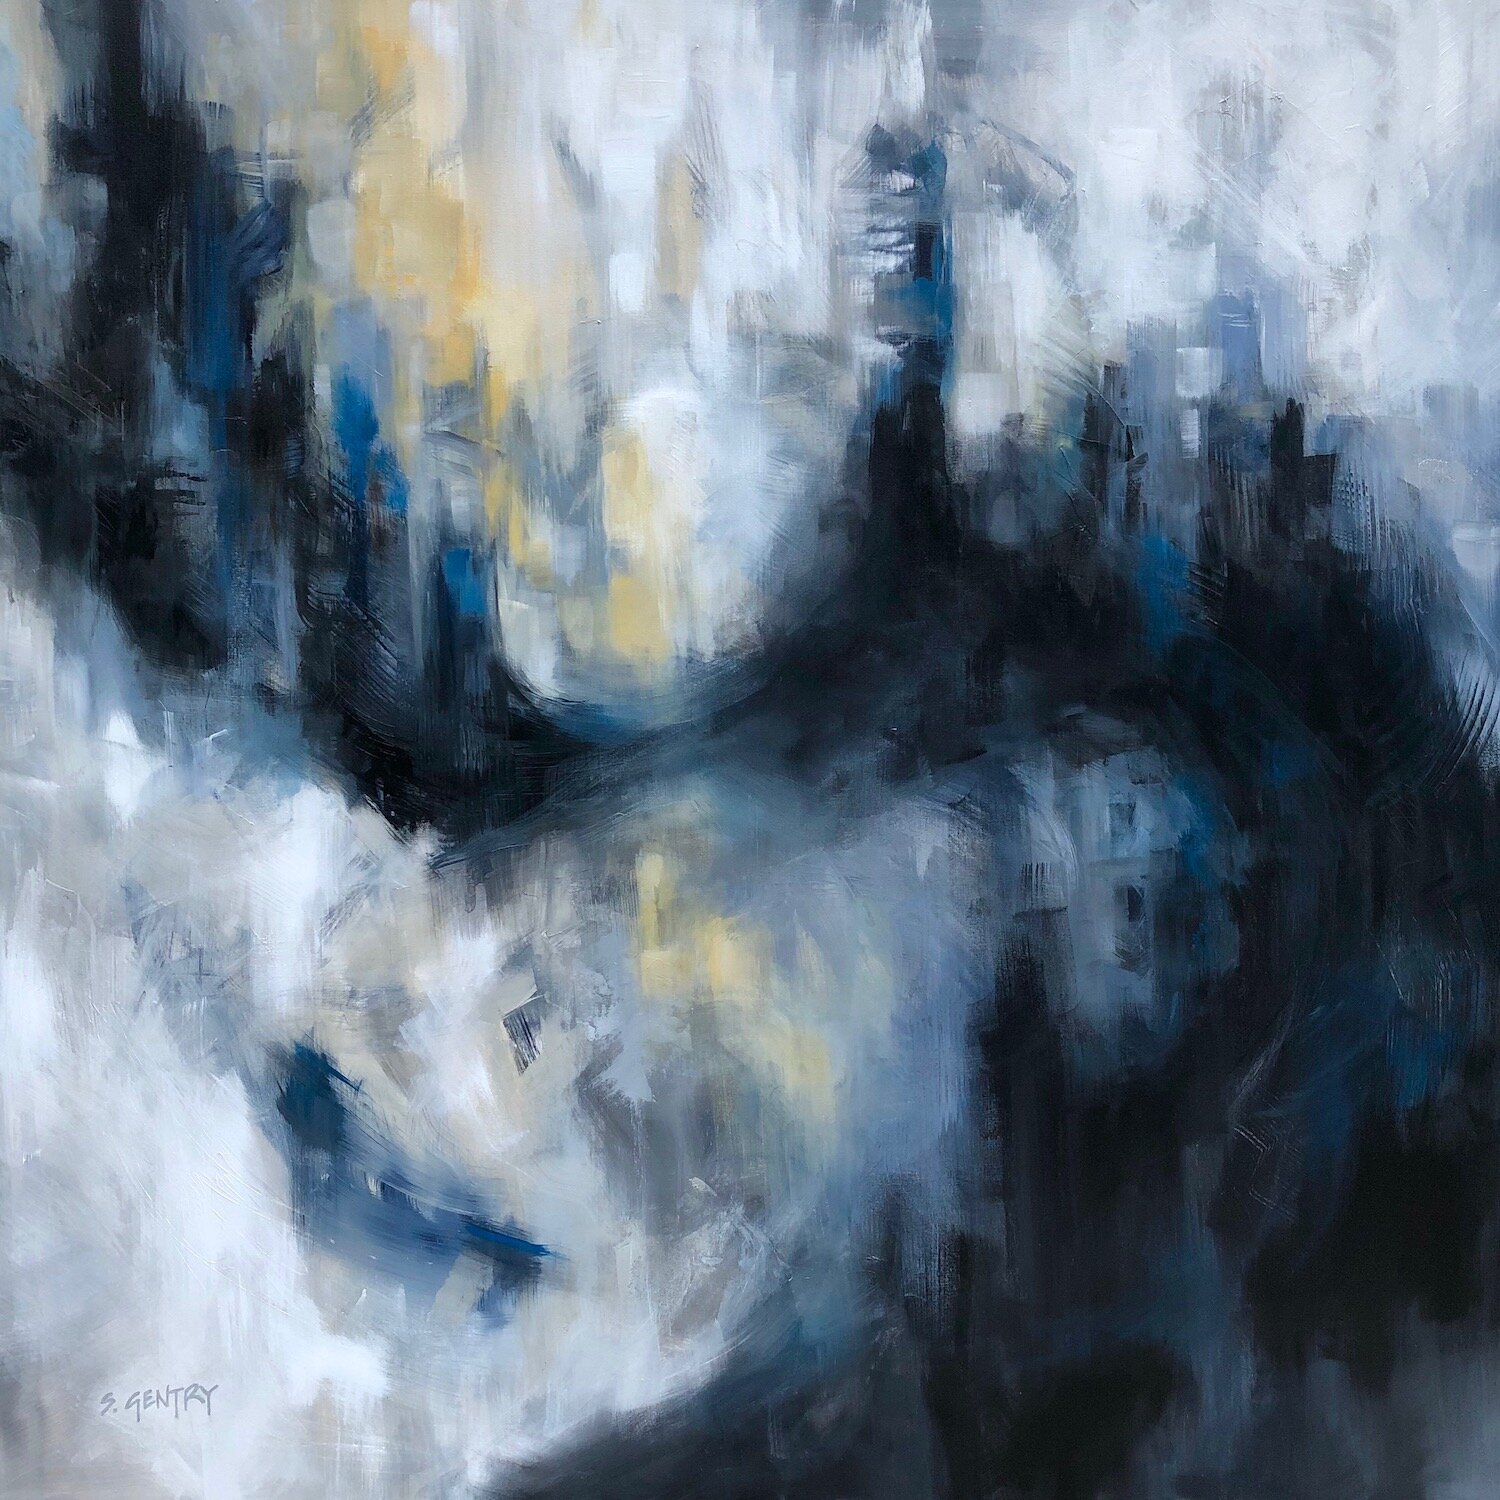    Dawning  , 48” x 48”, acrylic on canvas 